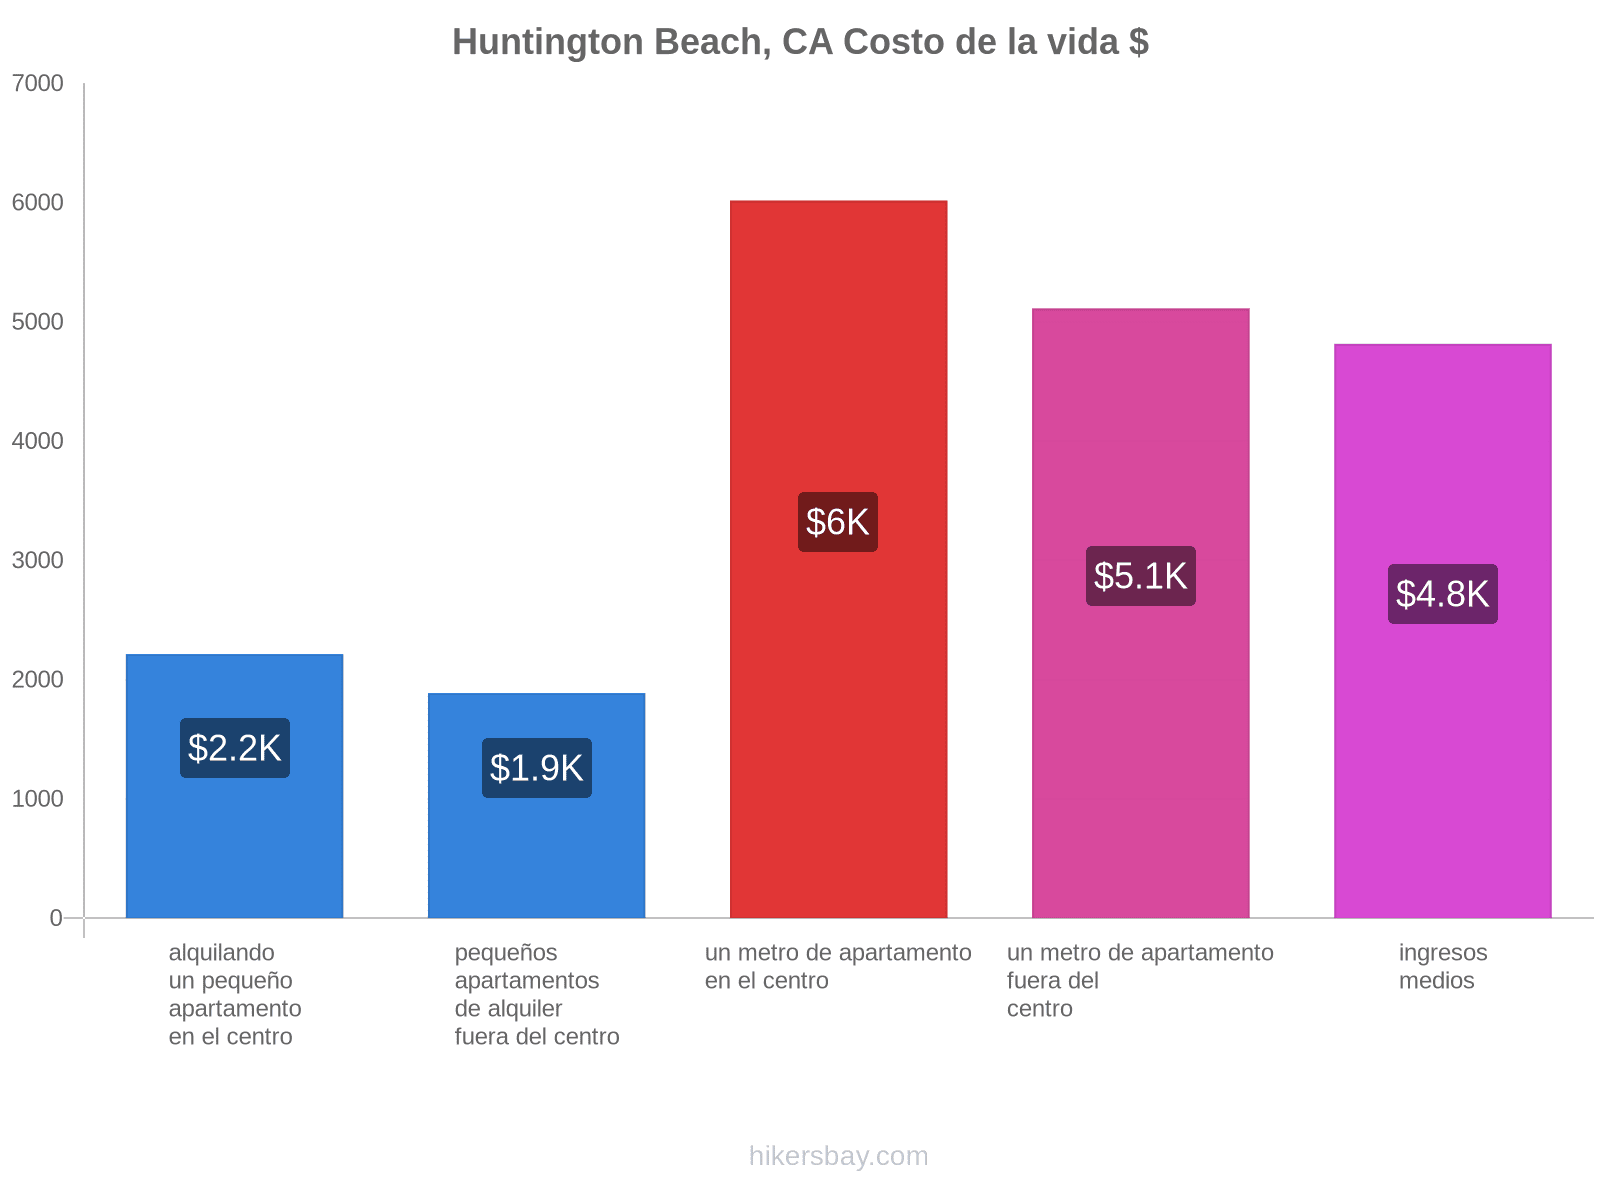 Huntington Beach, CA costo de la vida hikersbay.com